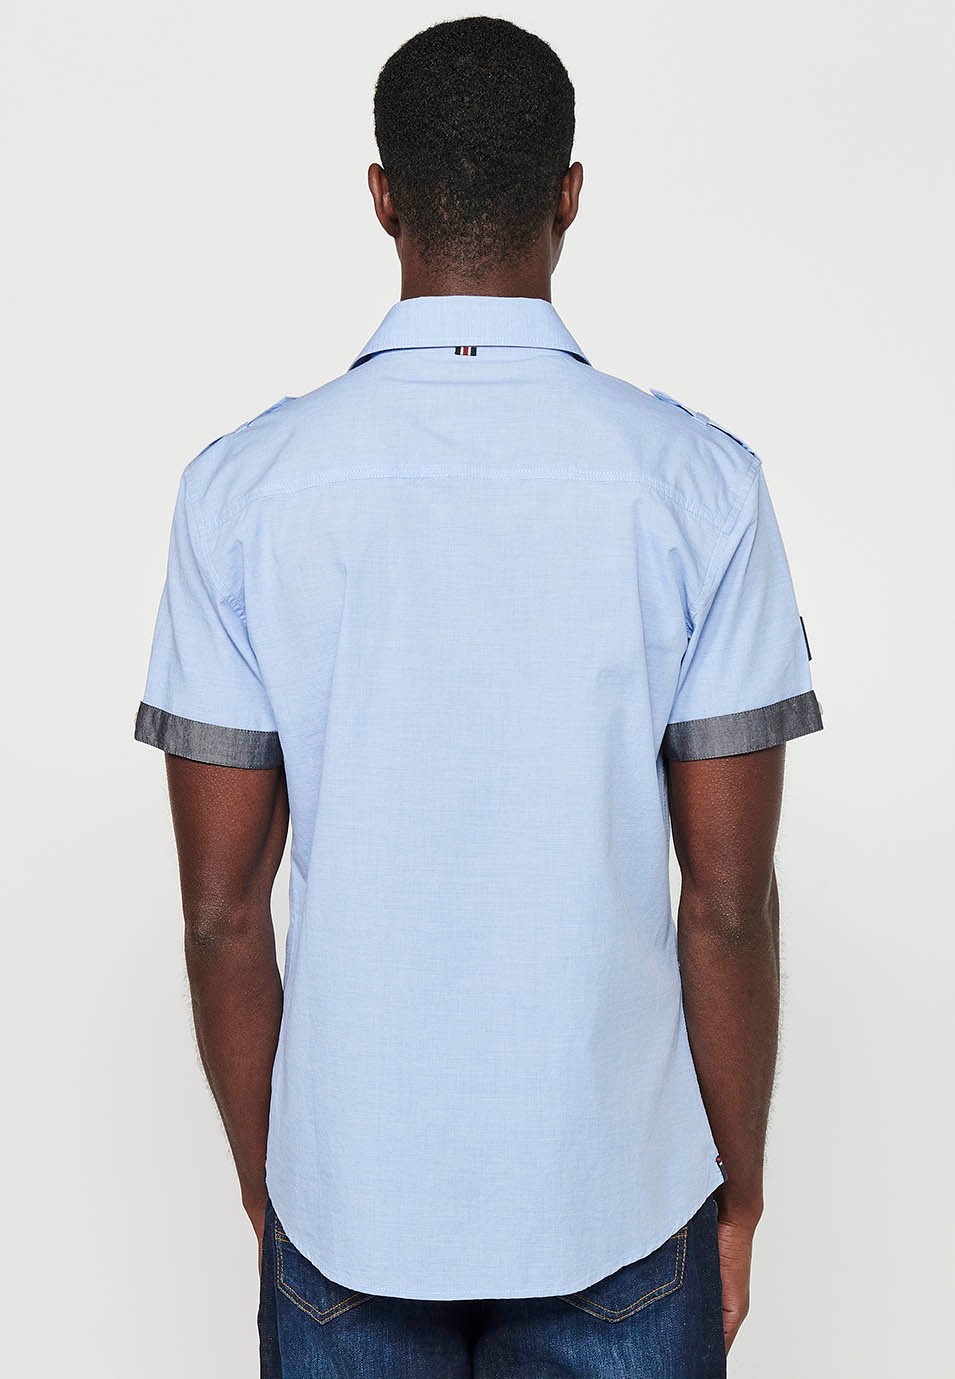 Camisa de algodon, manga corta, detalles hombro, color azul para hombre 7